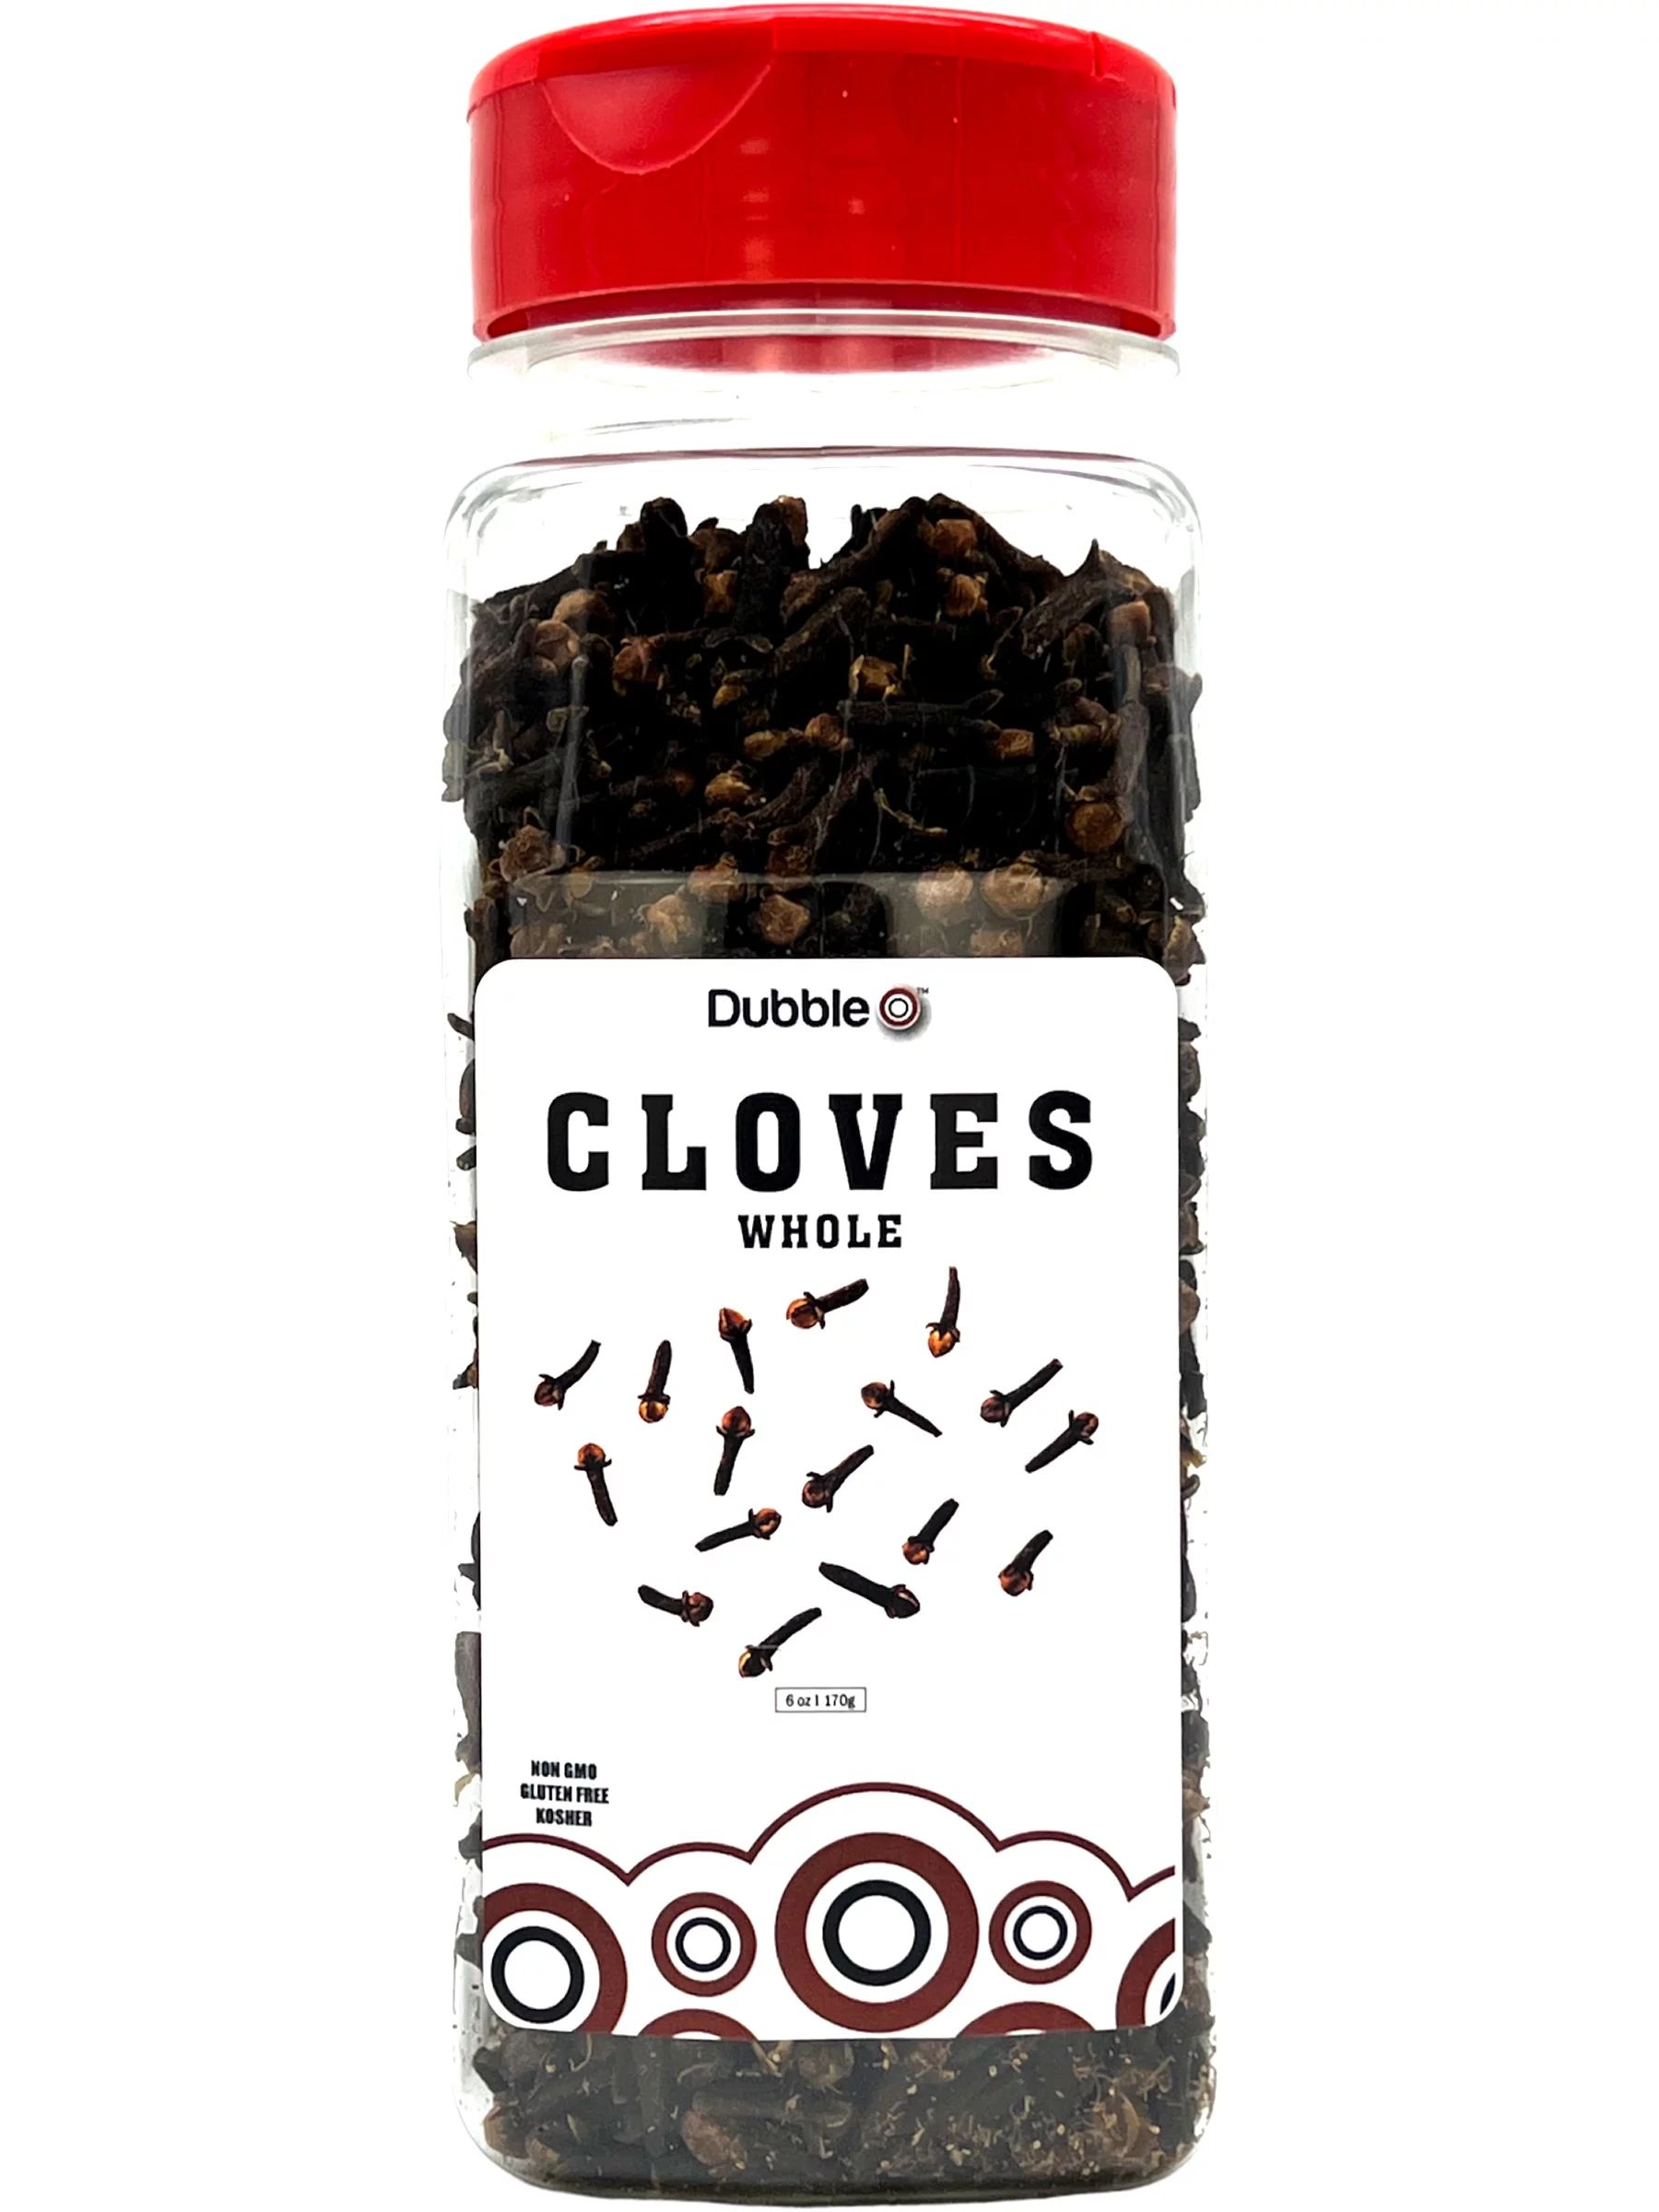 Whole Cloves Spice - 7 oz. - Non GMO, Kosher, Halal, Gluten Free - Dubble O Brand | Walmart (US)